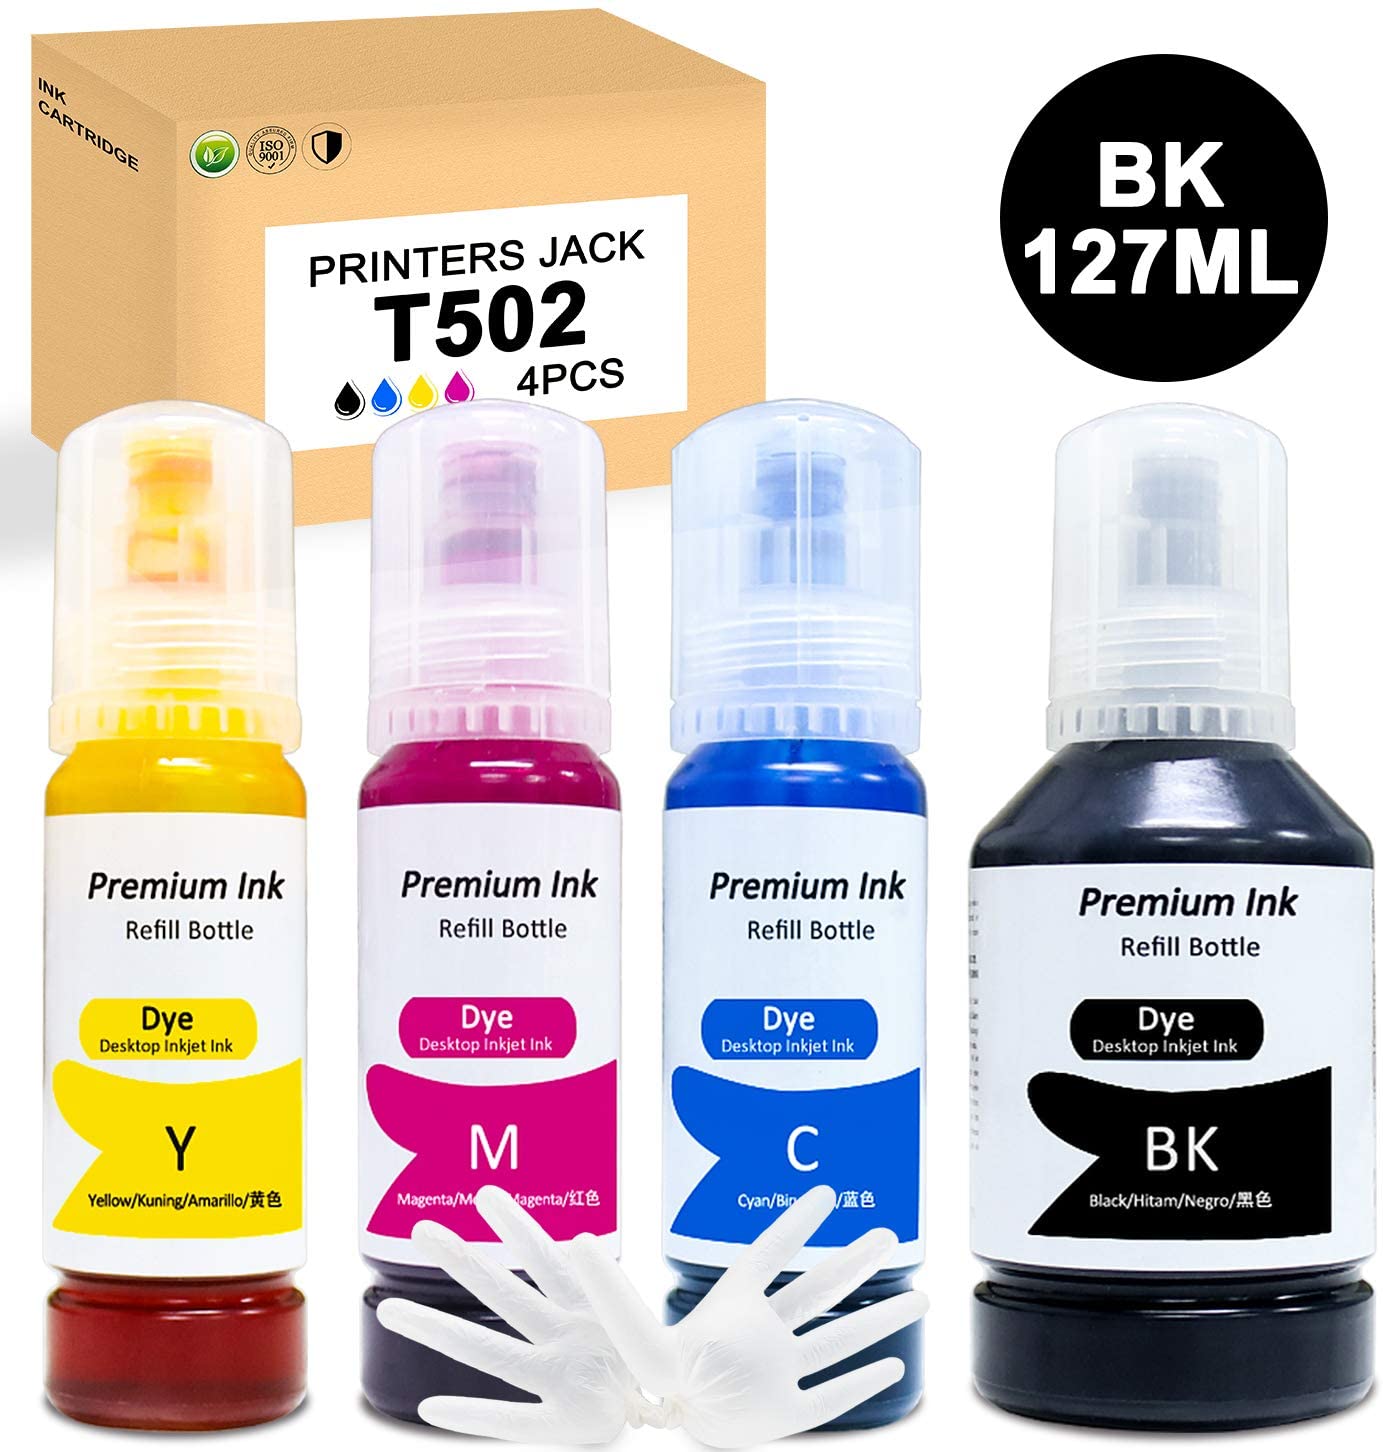 Epson EcoTank 502 Ink Bottle Black T502120-S - Best Buy